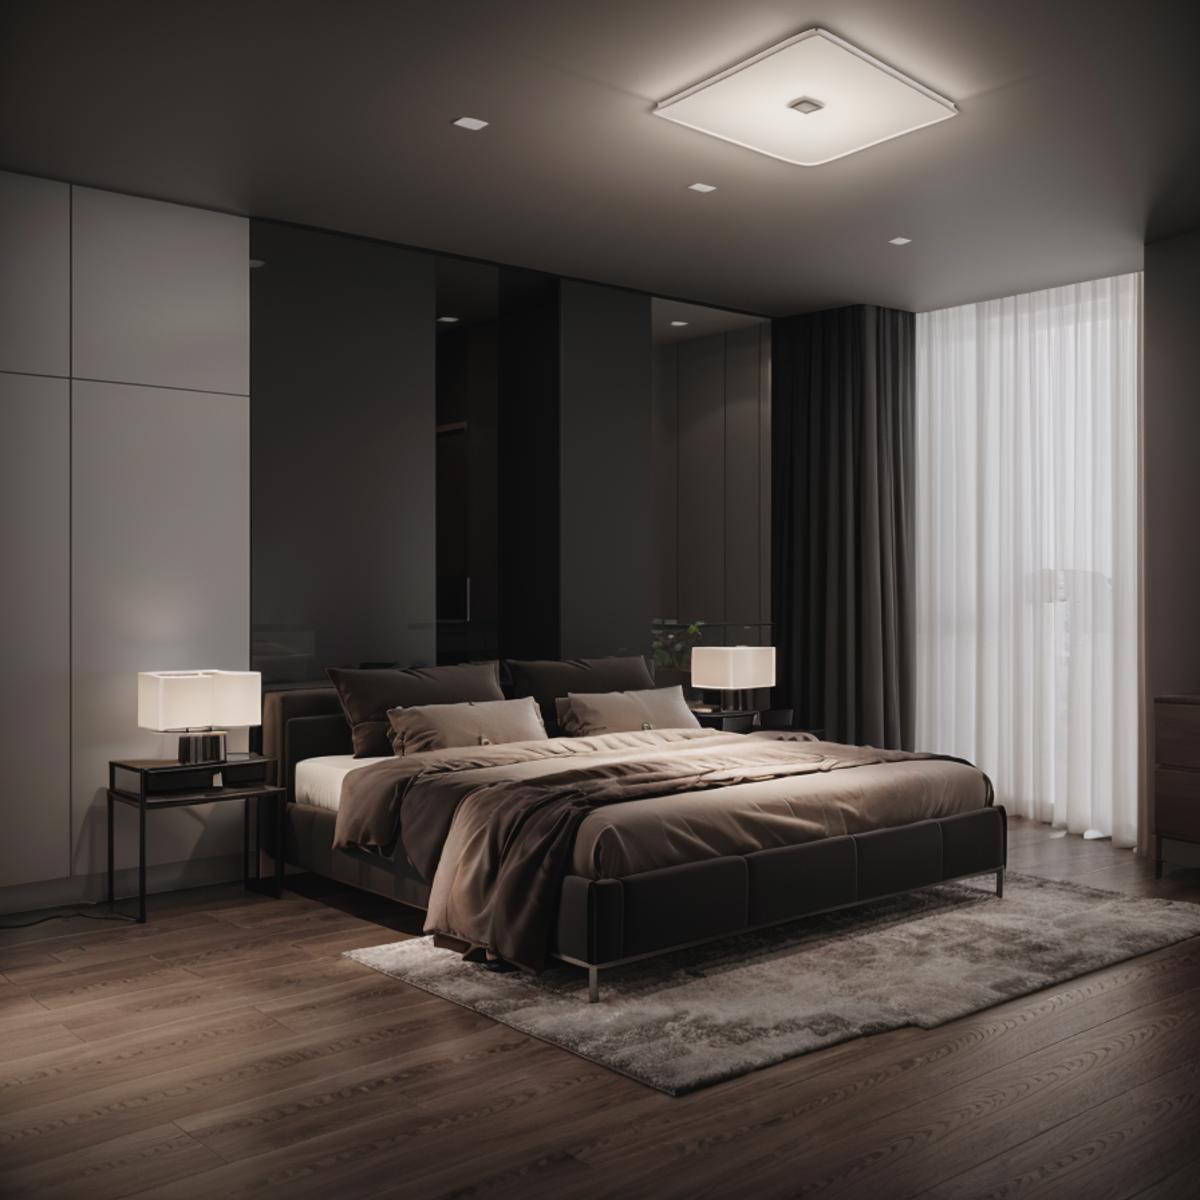 Bedroom luxury T1 image by duongvanhanharc193